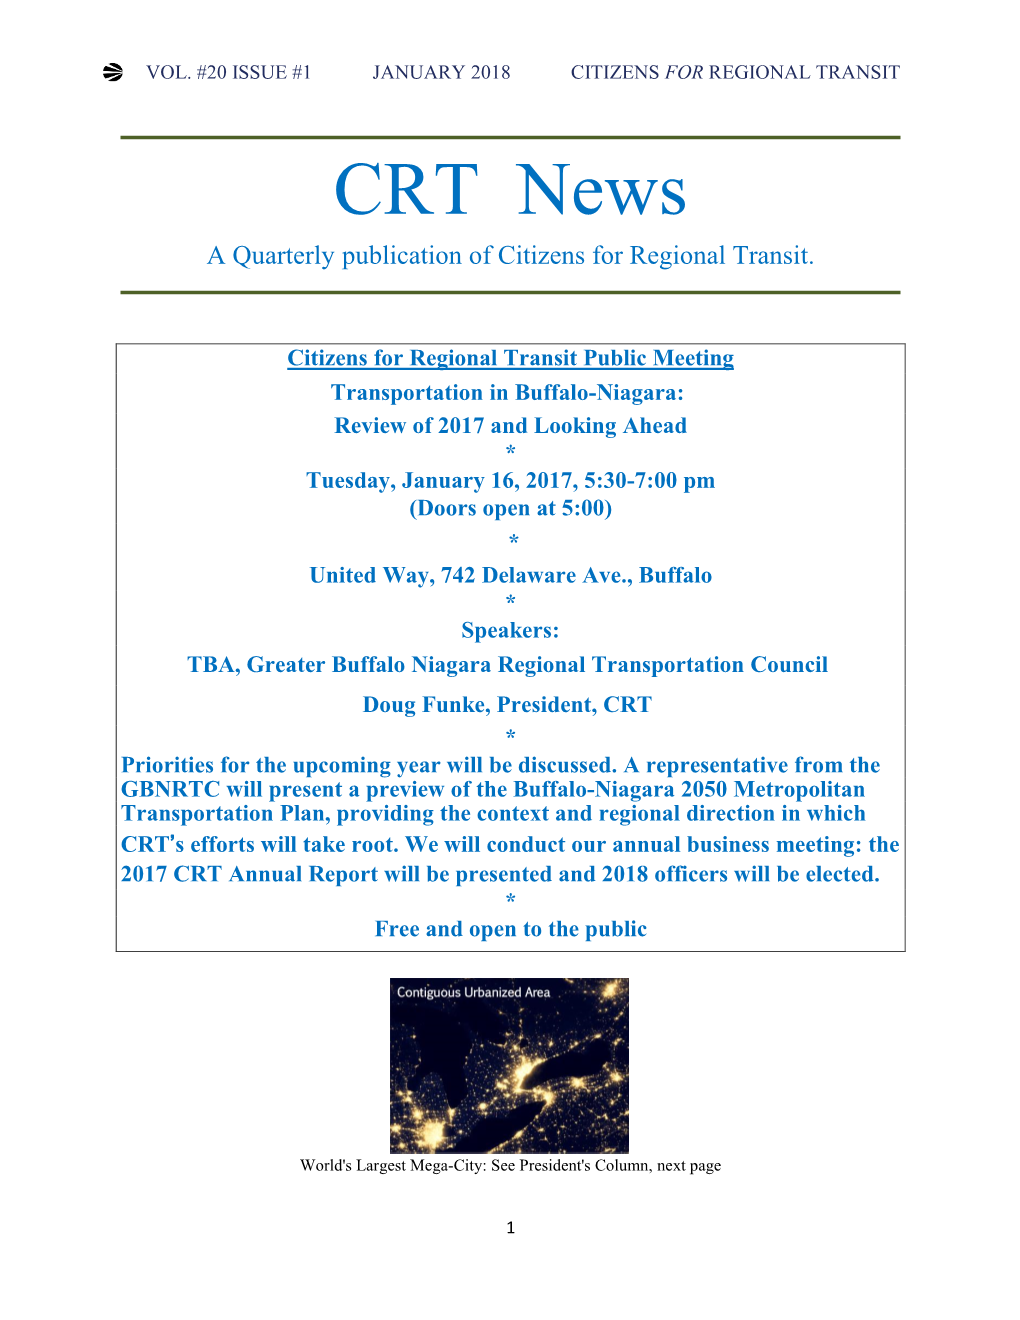 CRT News a Quarterly Publication of Citizens for Regional Transit